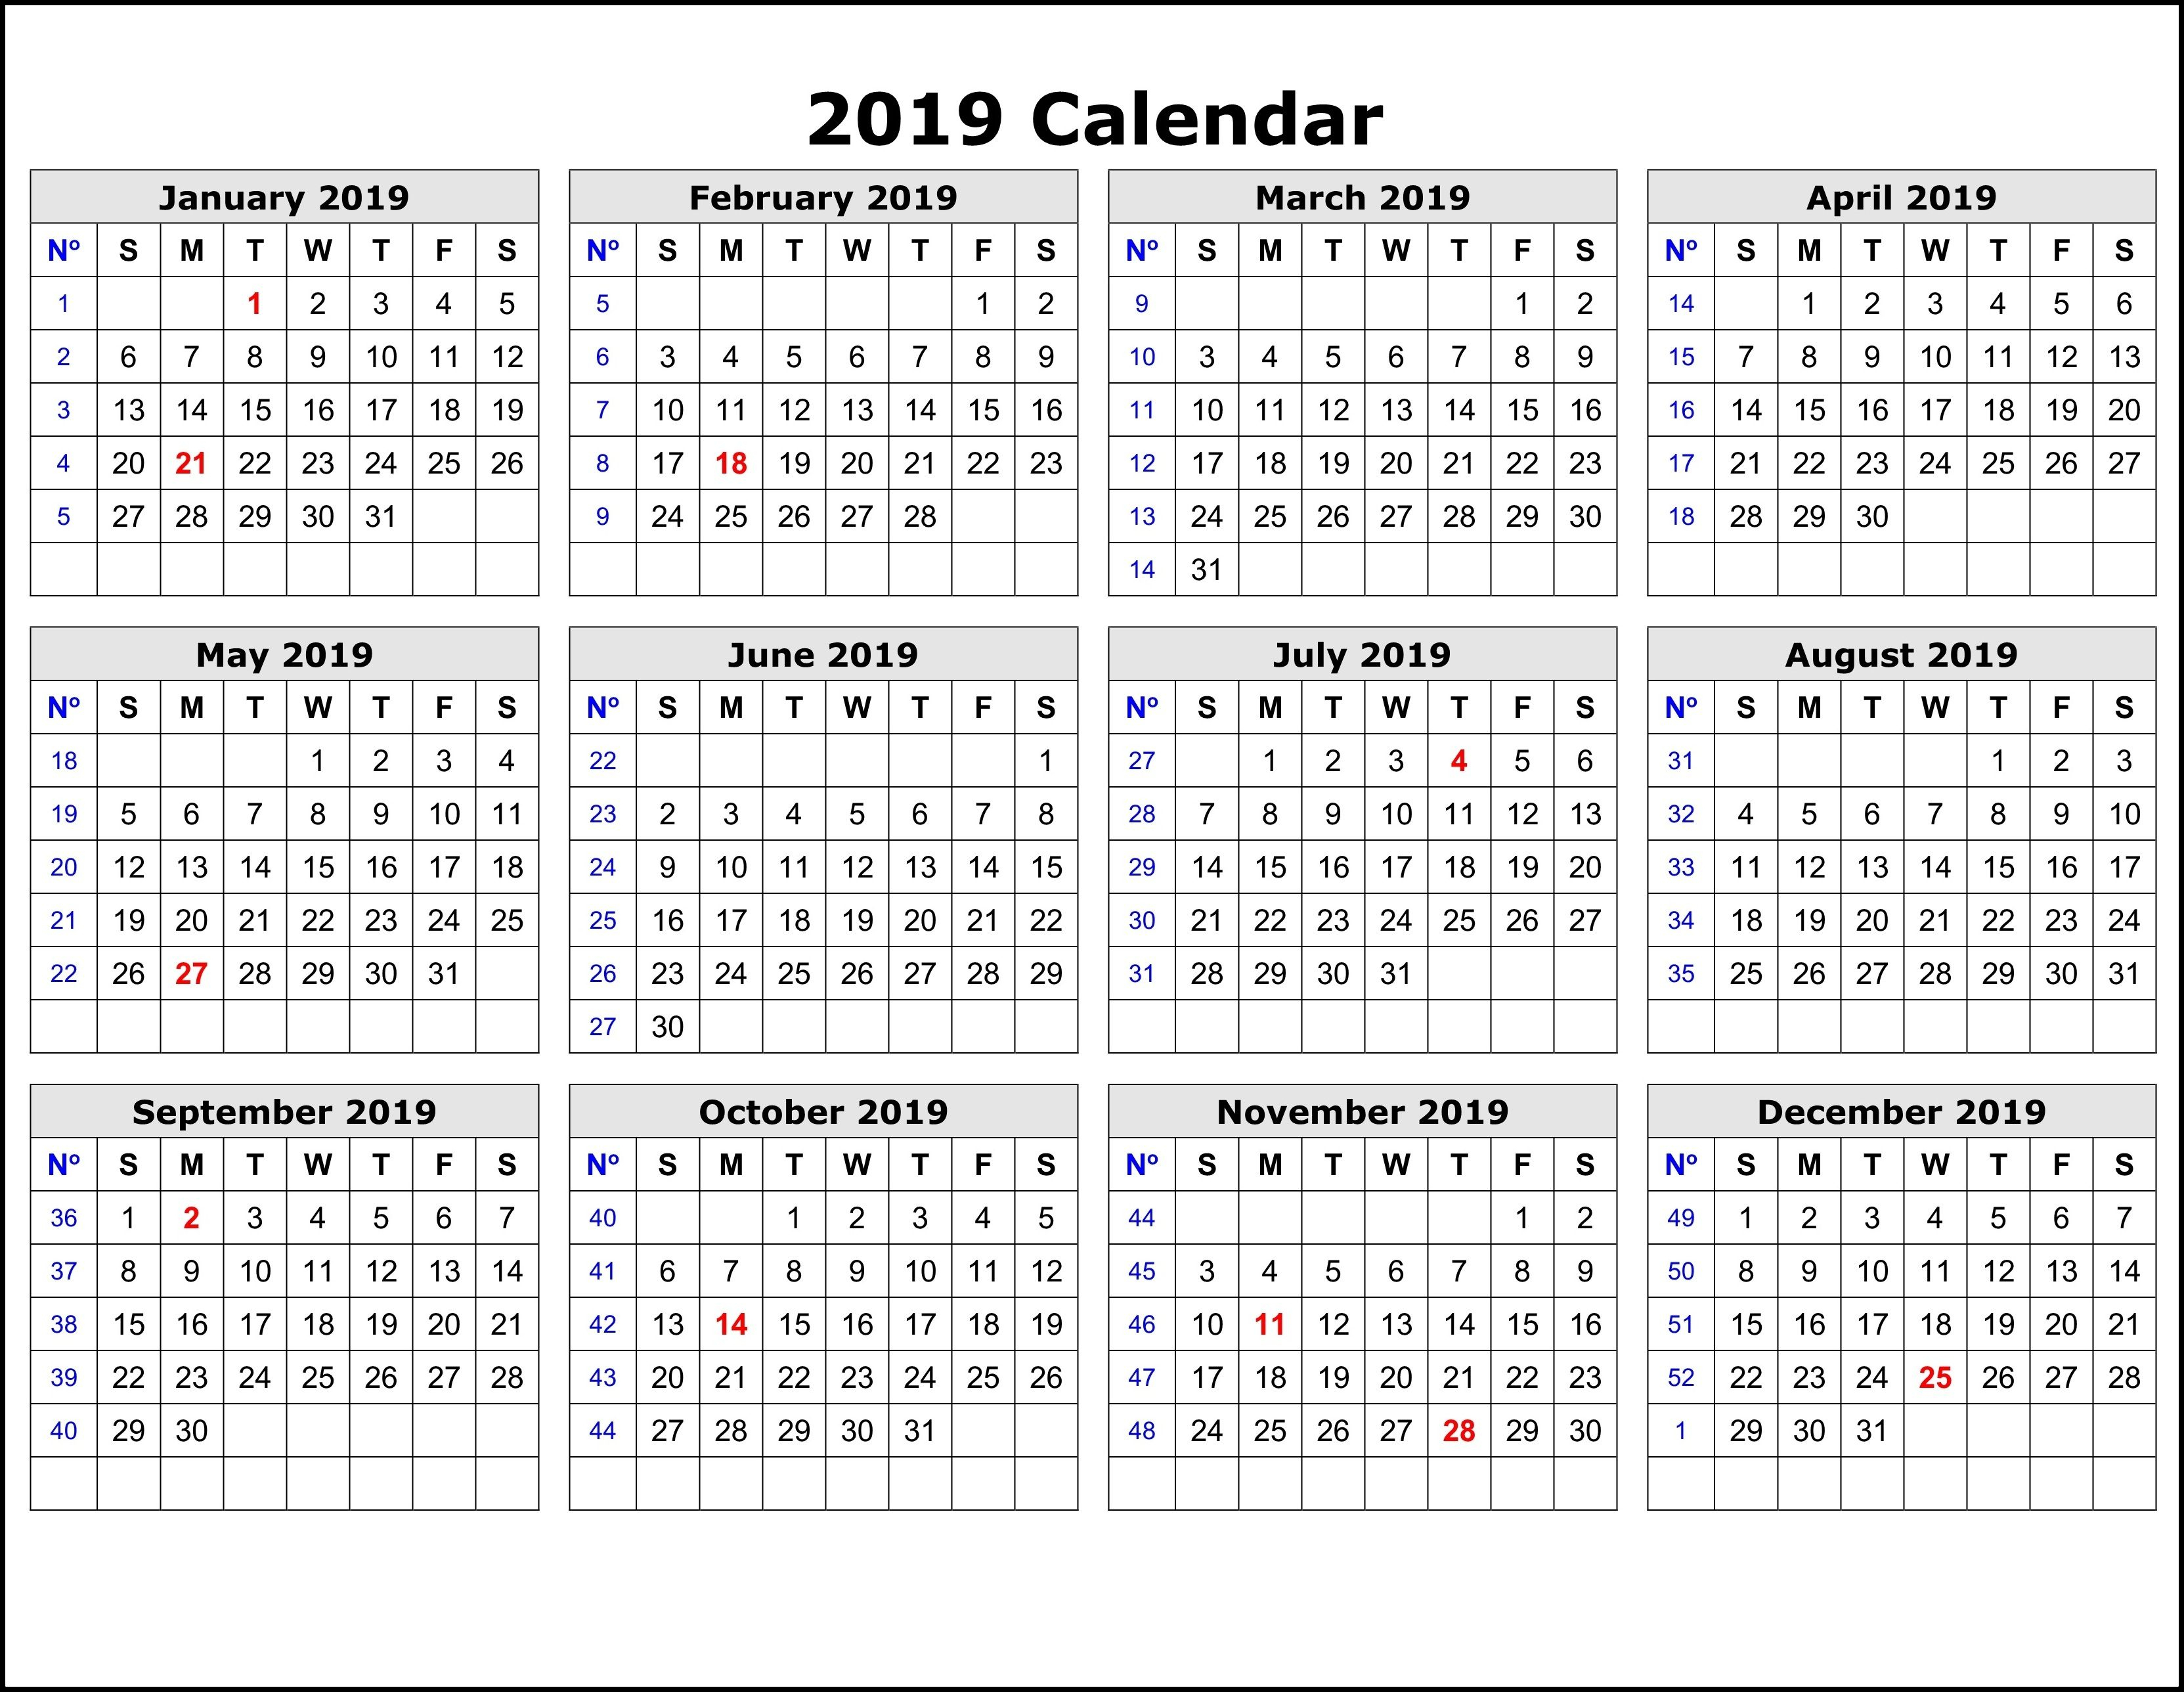 2019 Calendar Template By Week | Printable Calendar Template inside Printable Calendar By Week